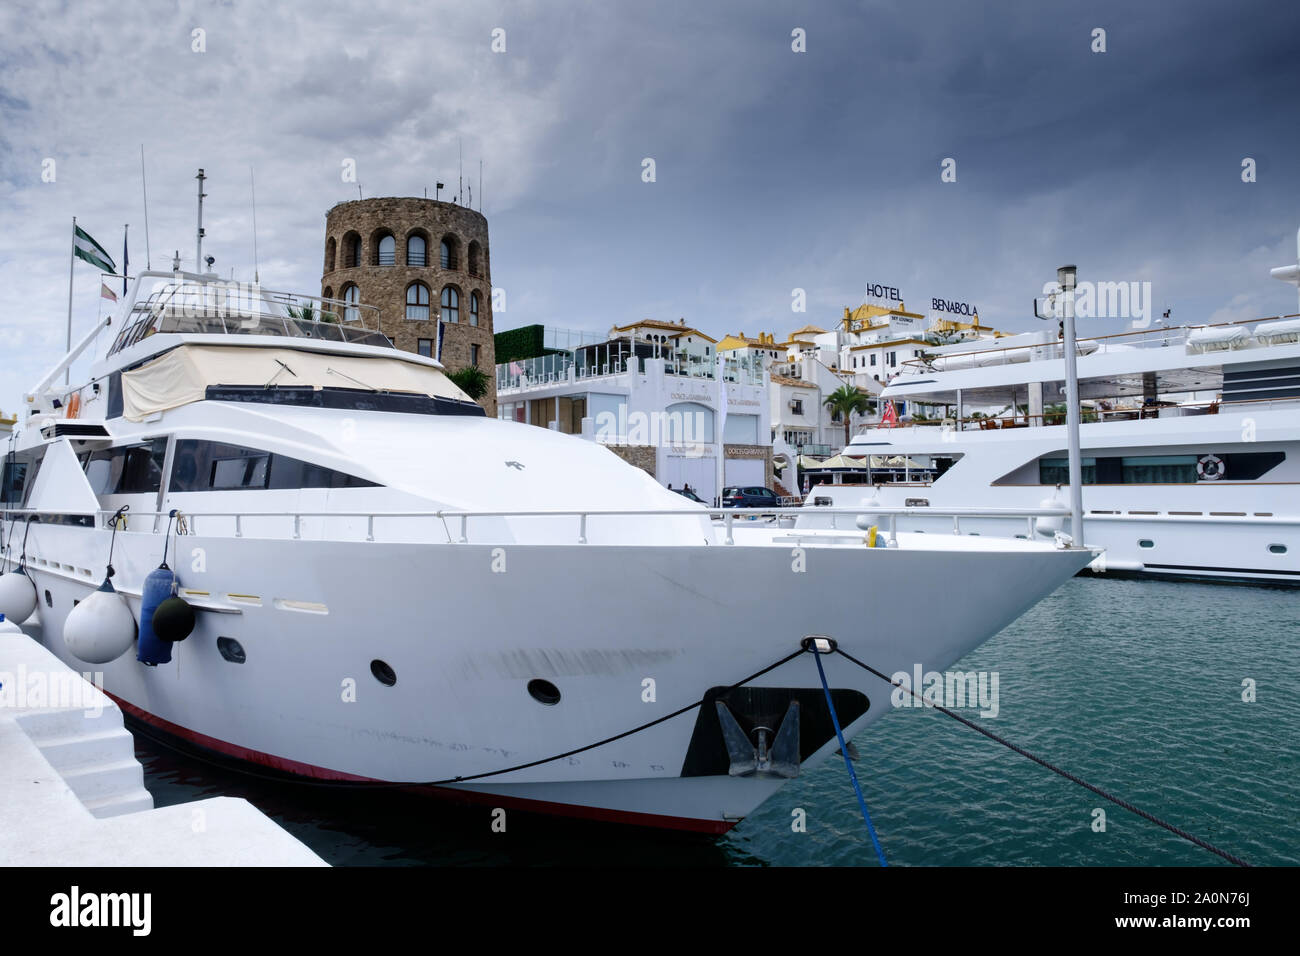 Puerto Banús - Marbella's most glamorous marina